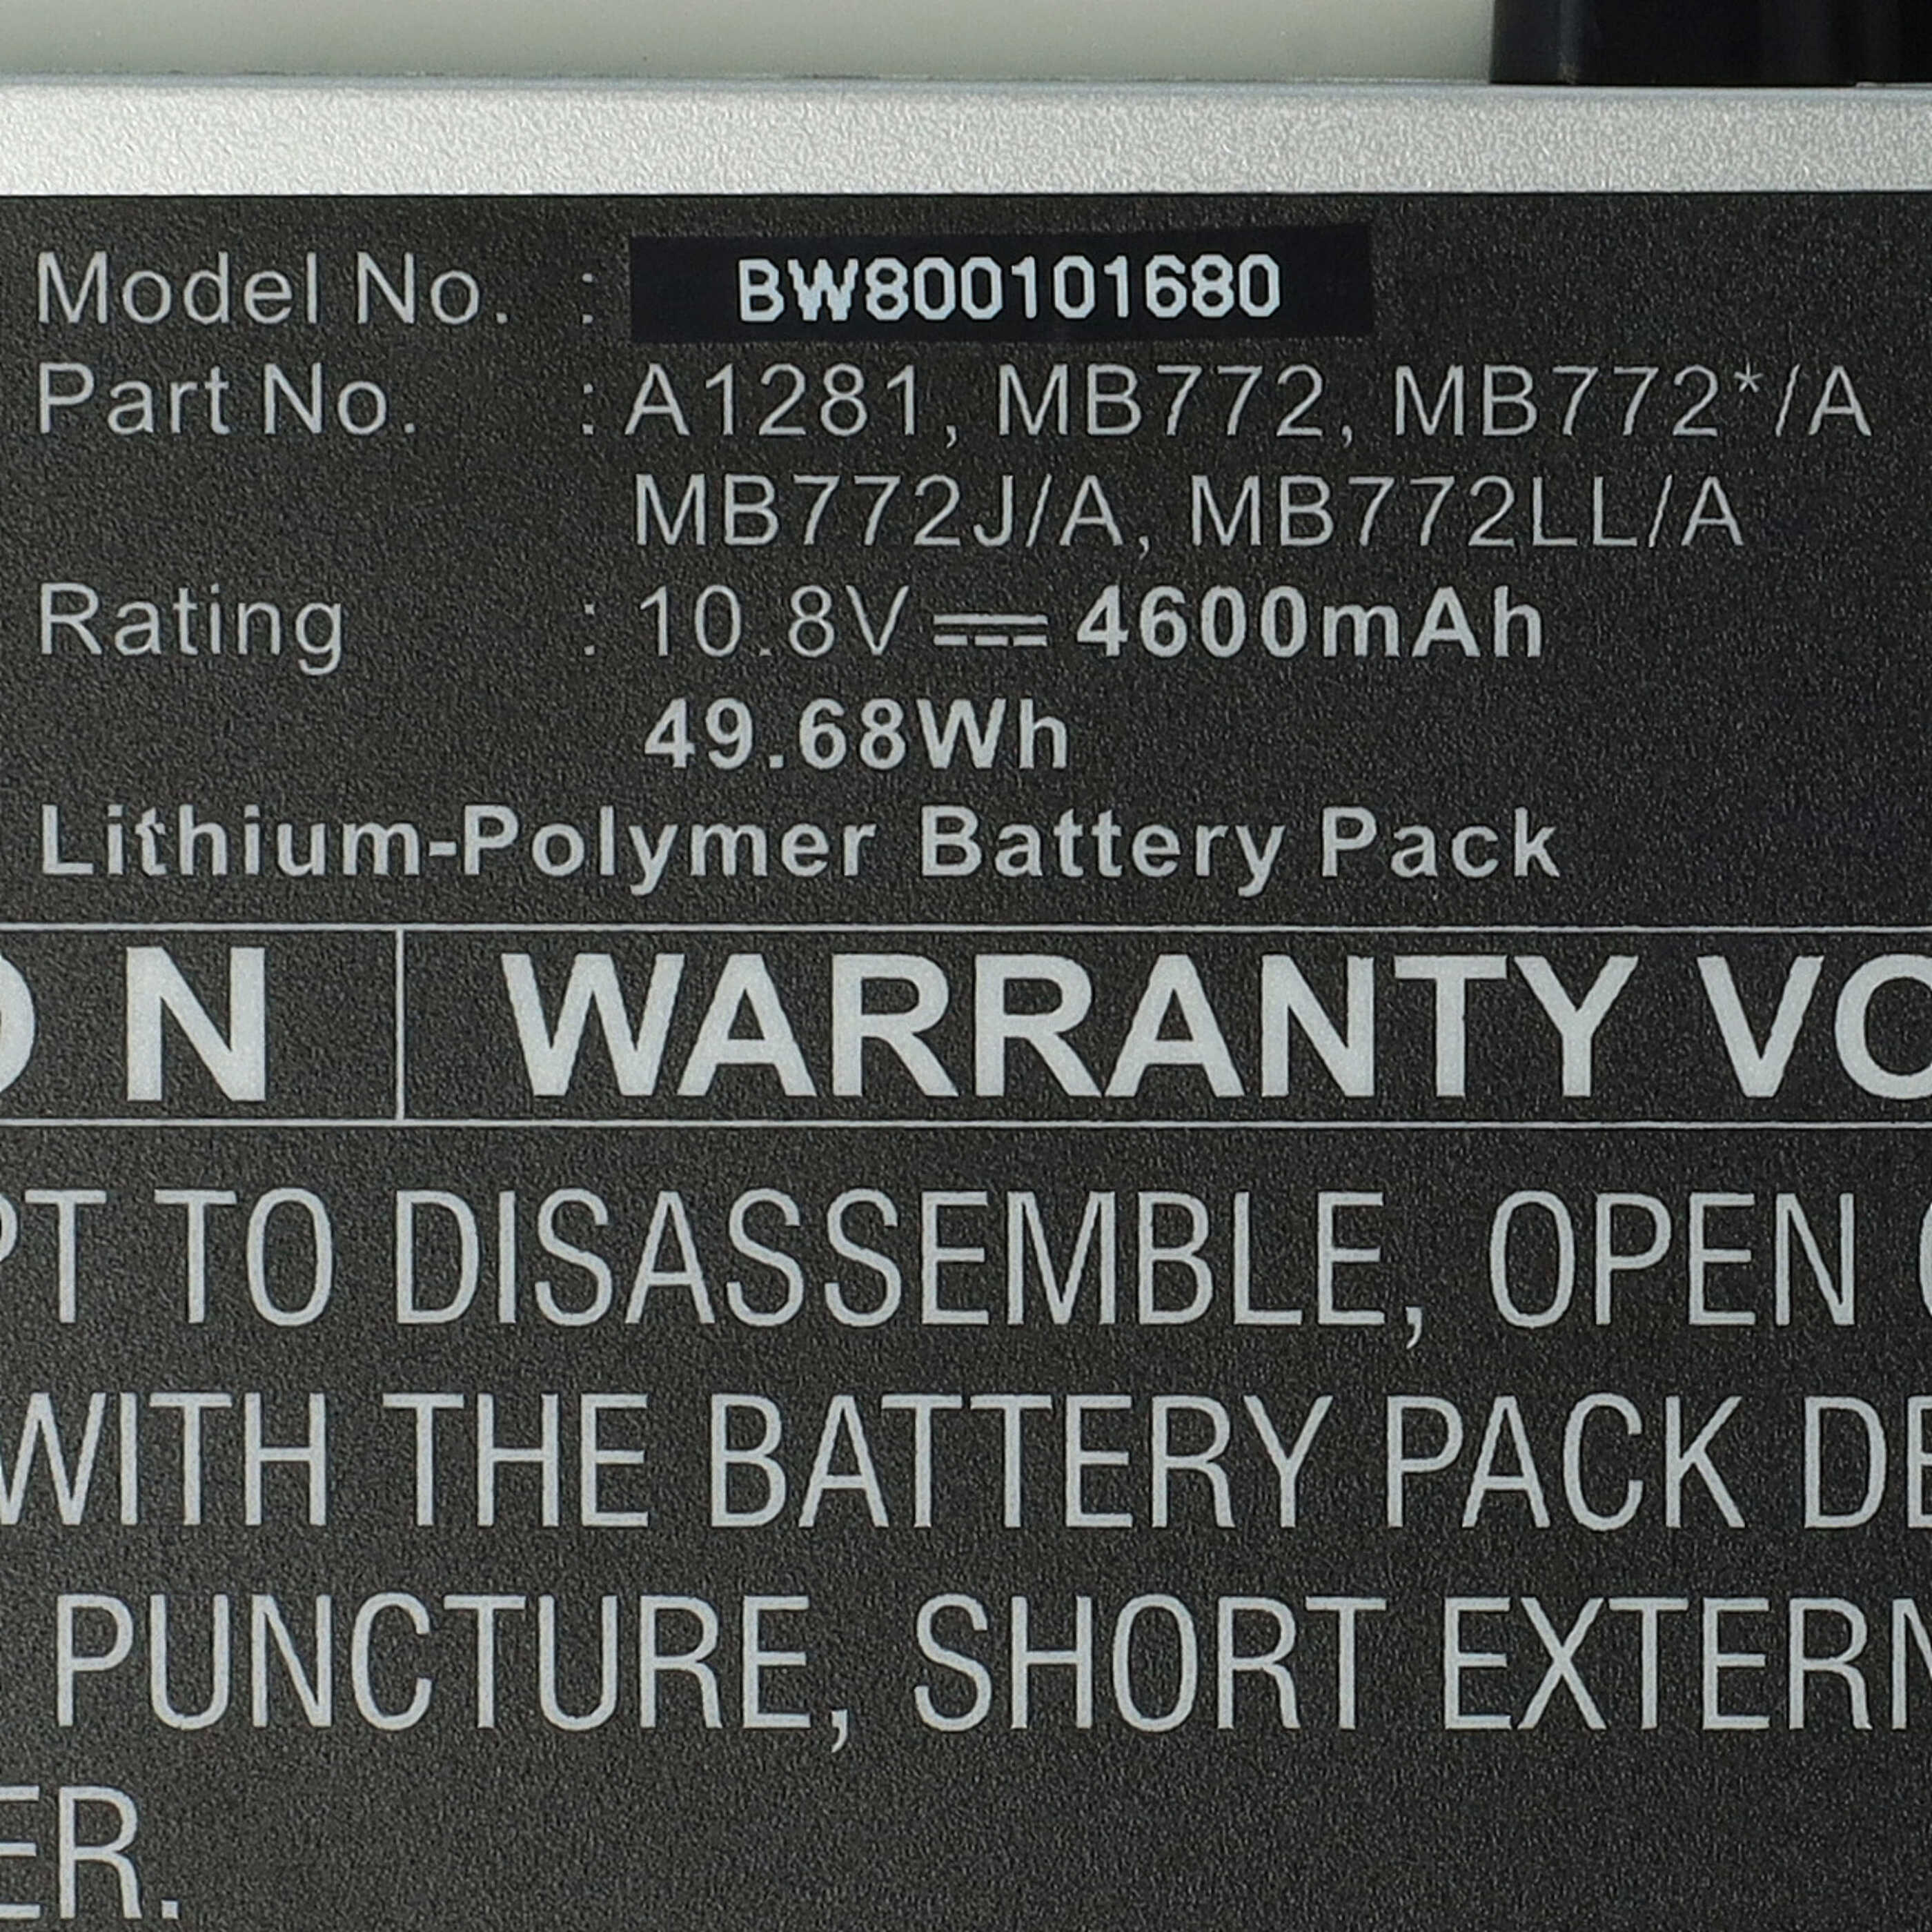 Akumulator do laptopa zamiennik Apple MB772*/A, MB772, A1286, A1281 - 4400 mAh 10,8 V Li-Ion, srebrny